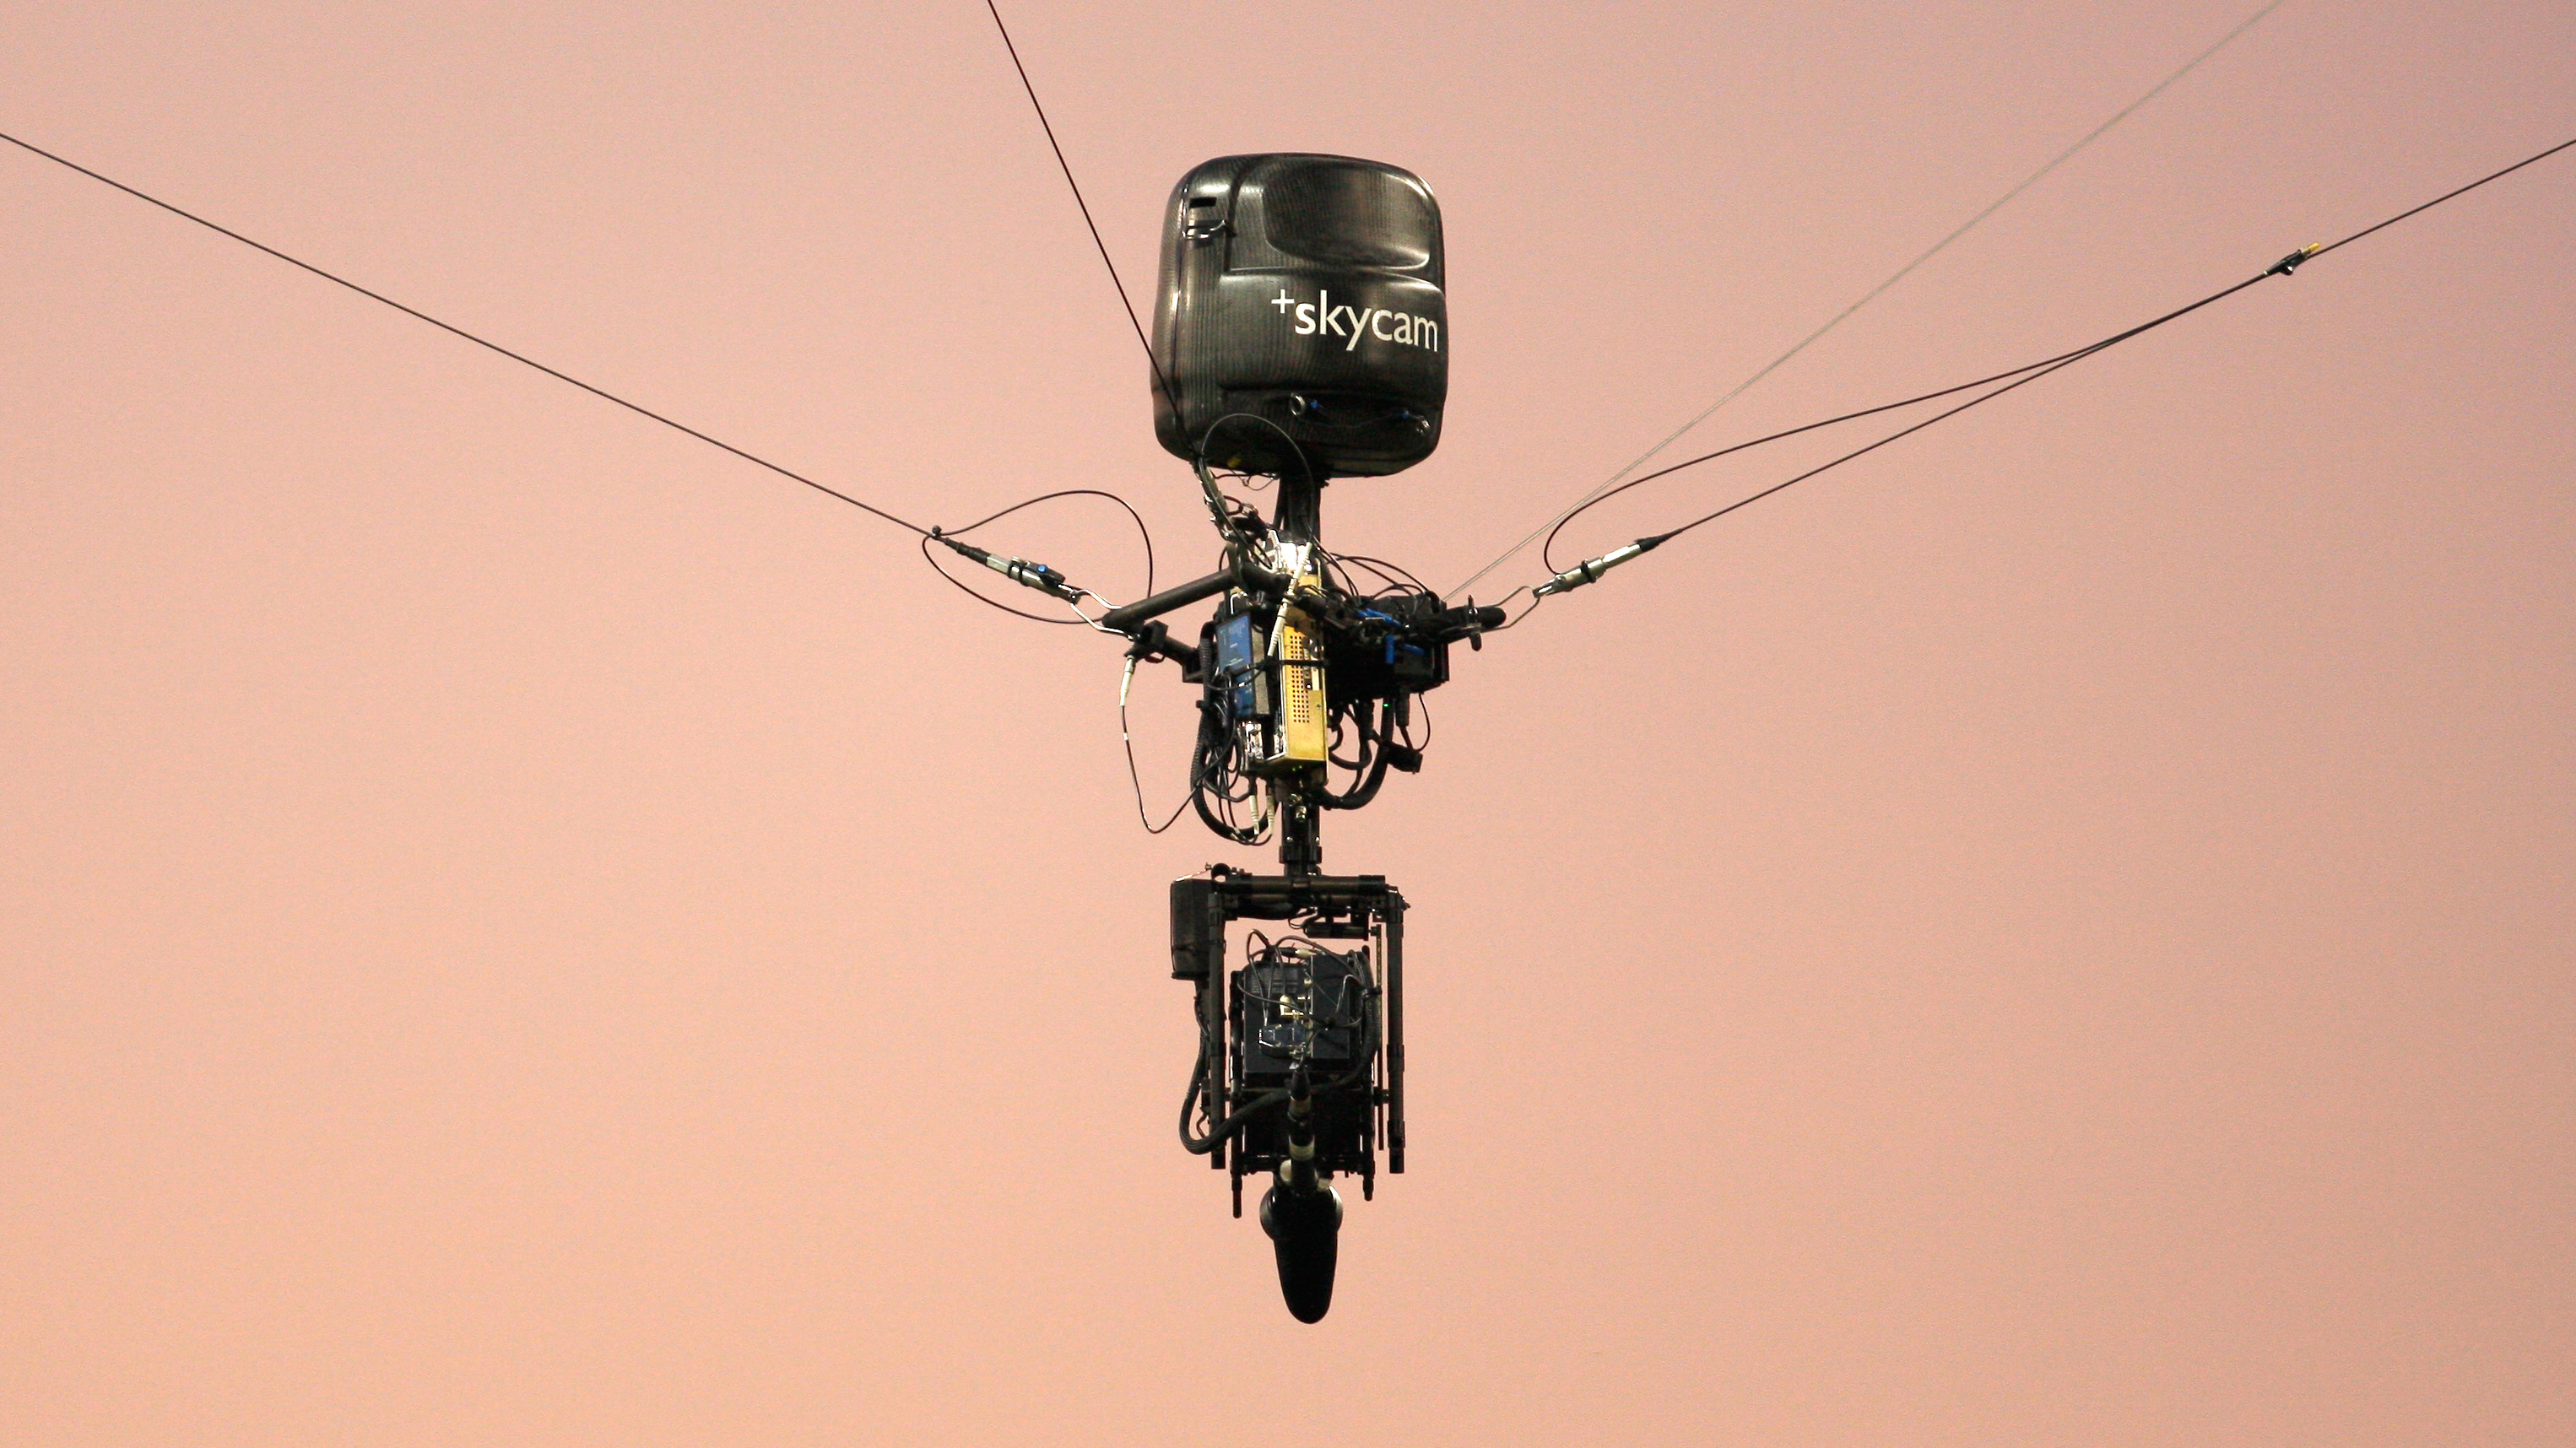 Skycam, kable bidez esekitako kamera-sistema